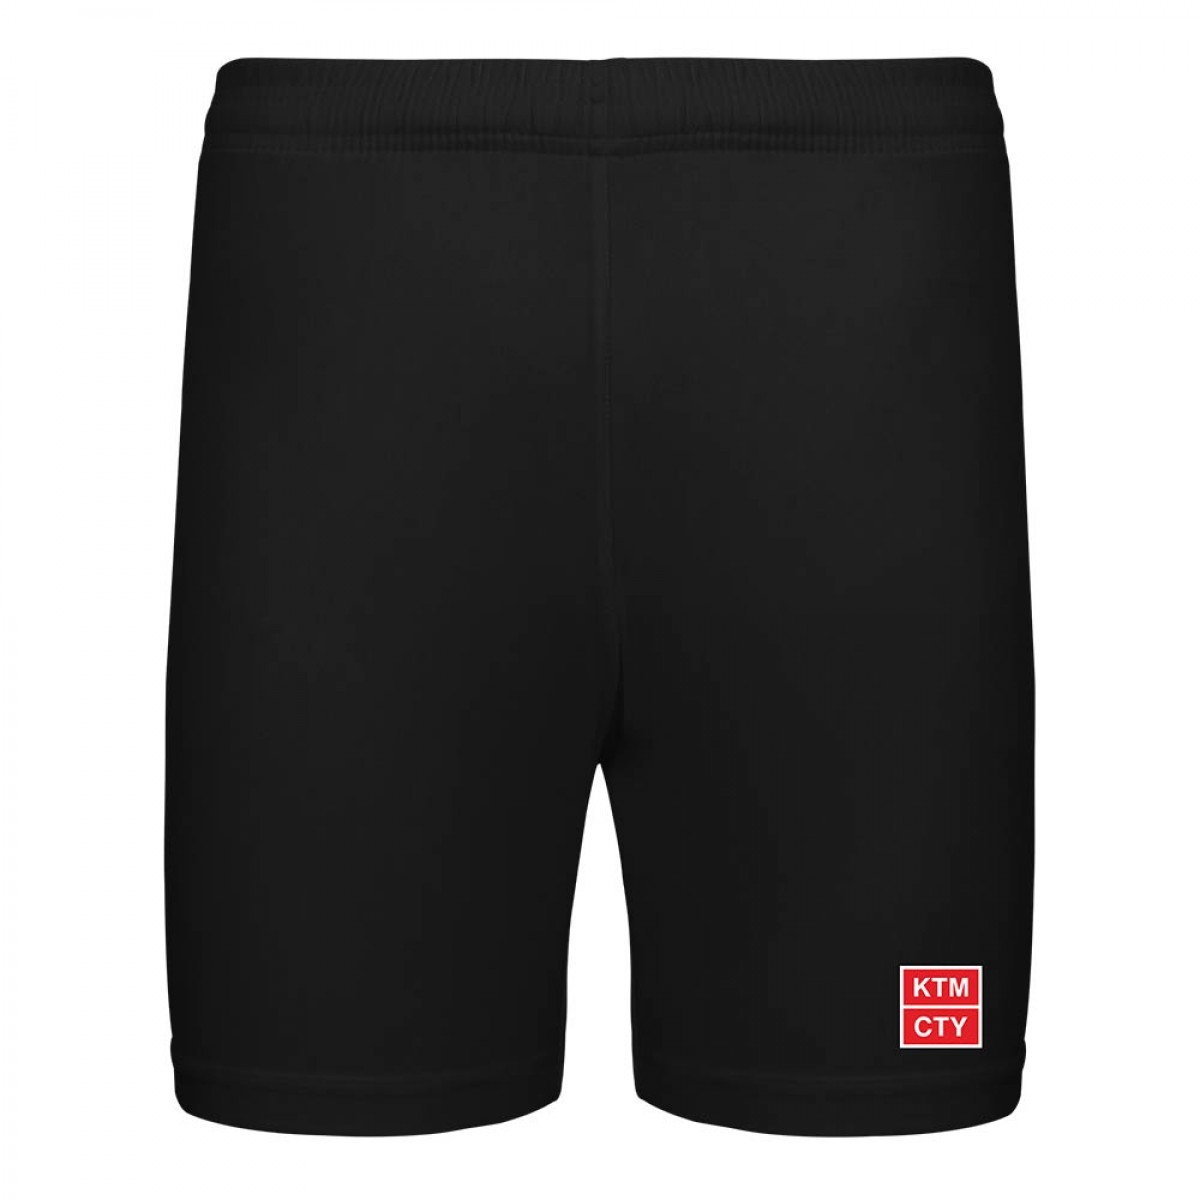 anfa-shorts-ms5957-8a